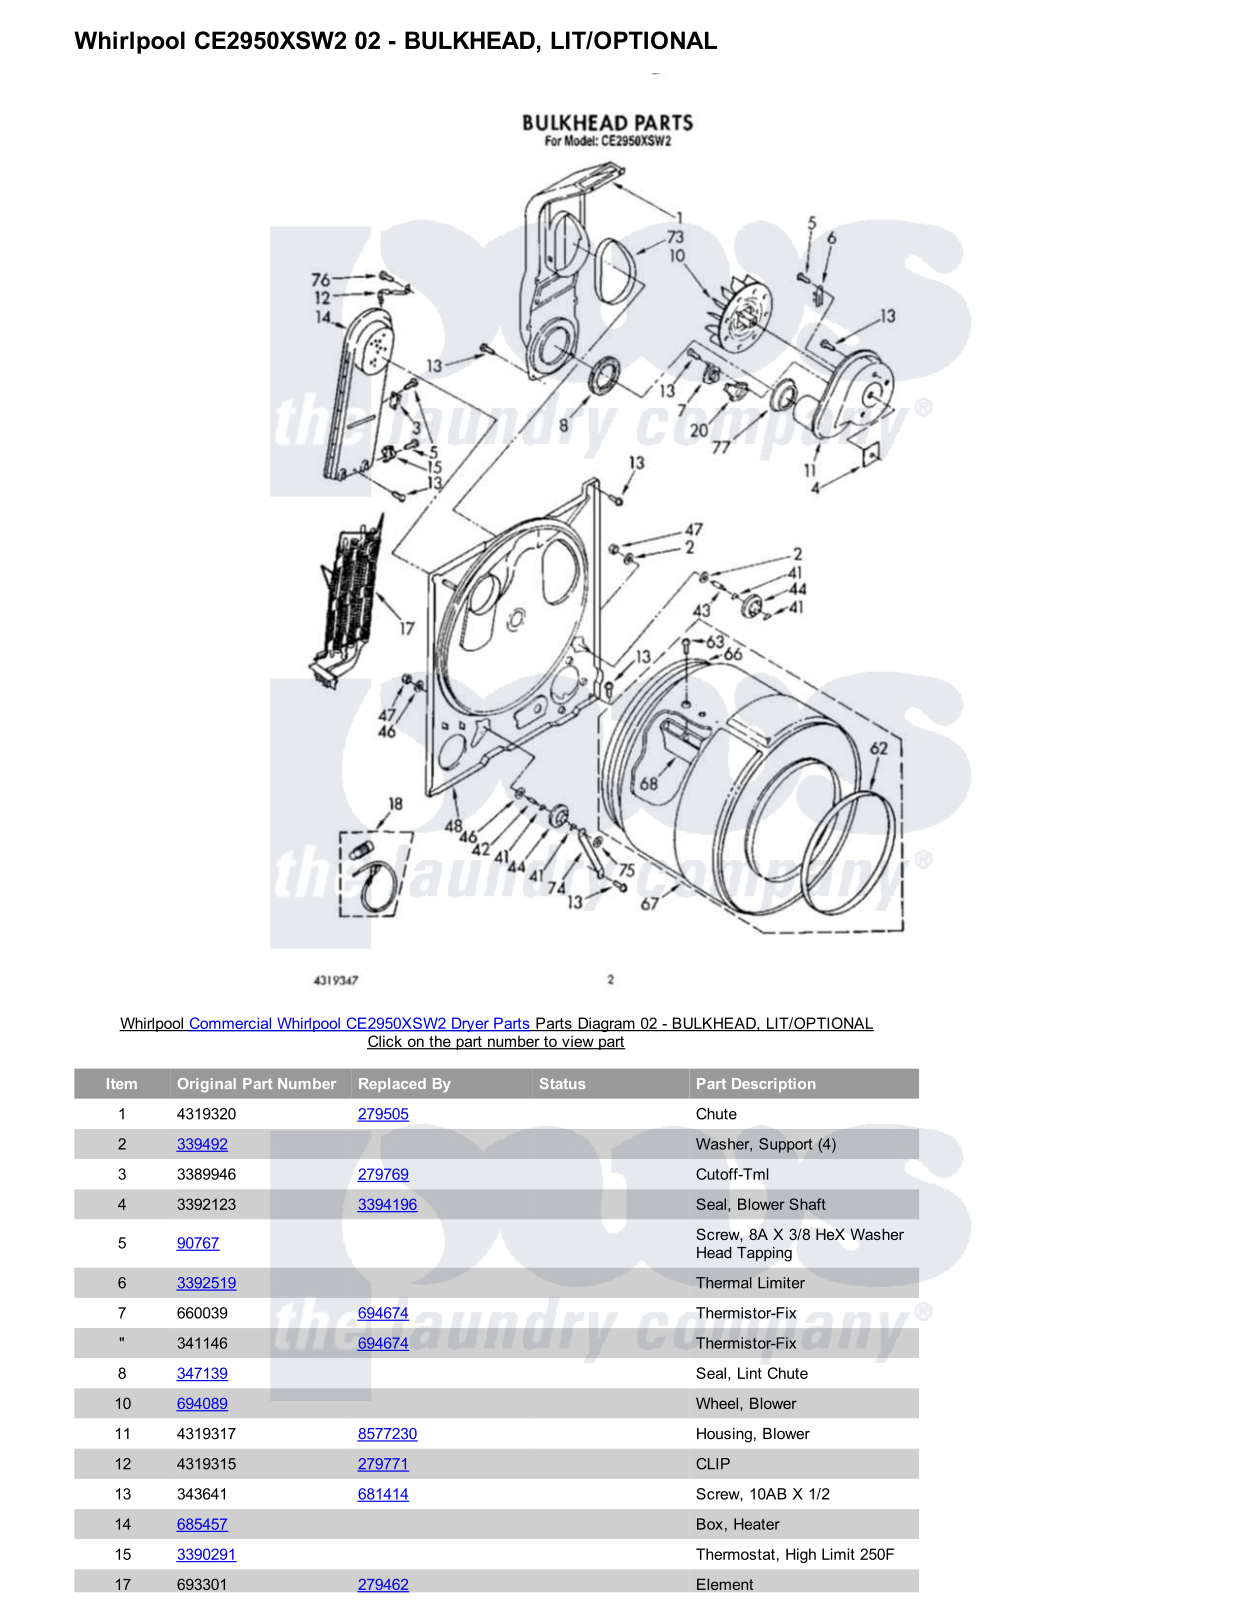 Whirlpool CE2950XSW2 Parts Diagram